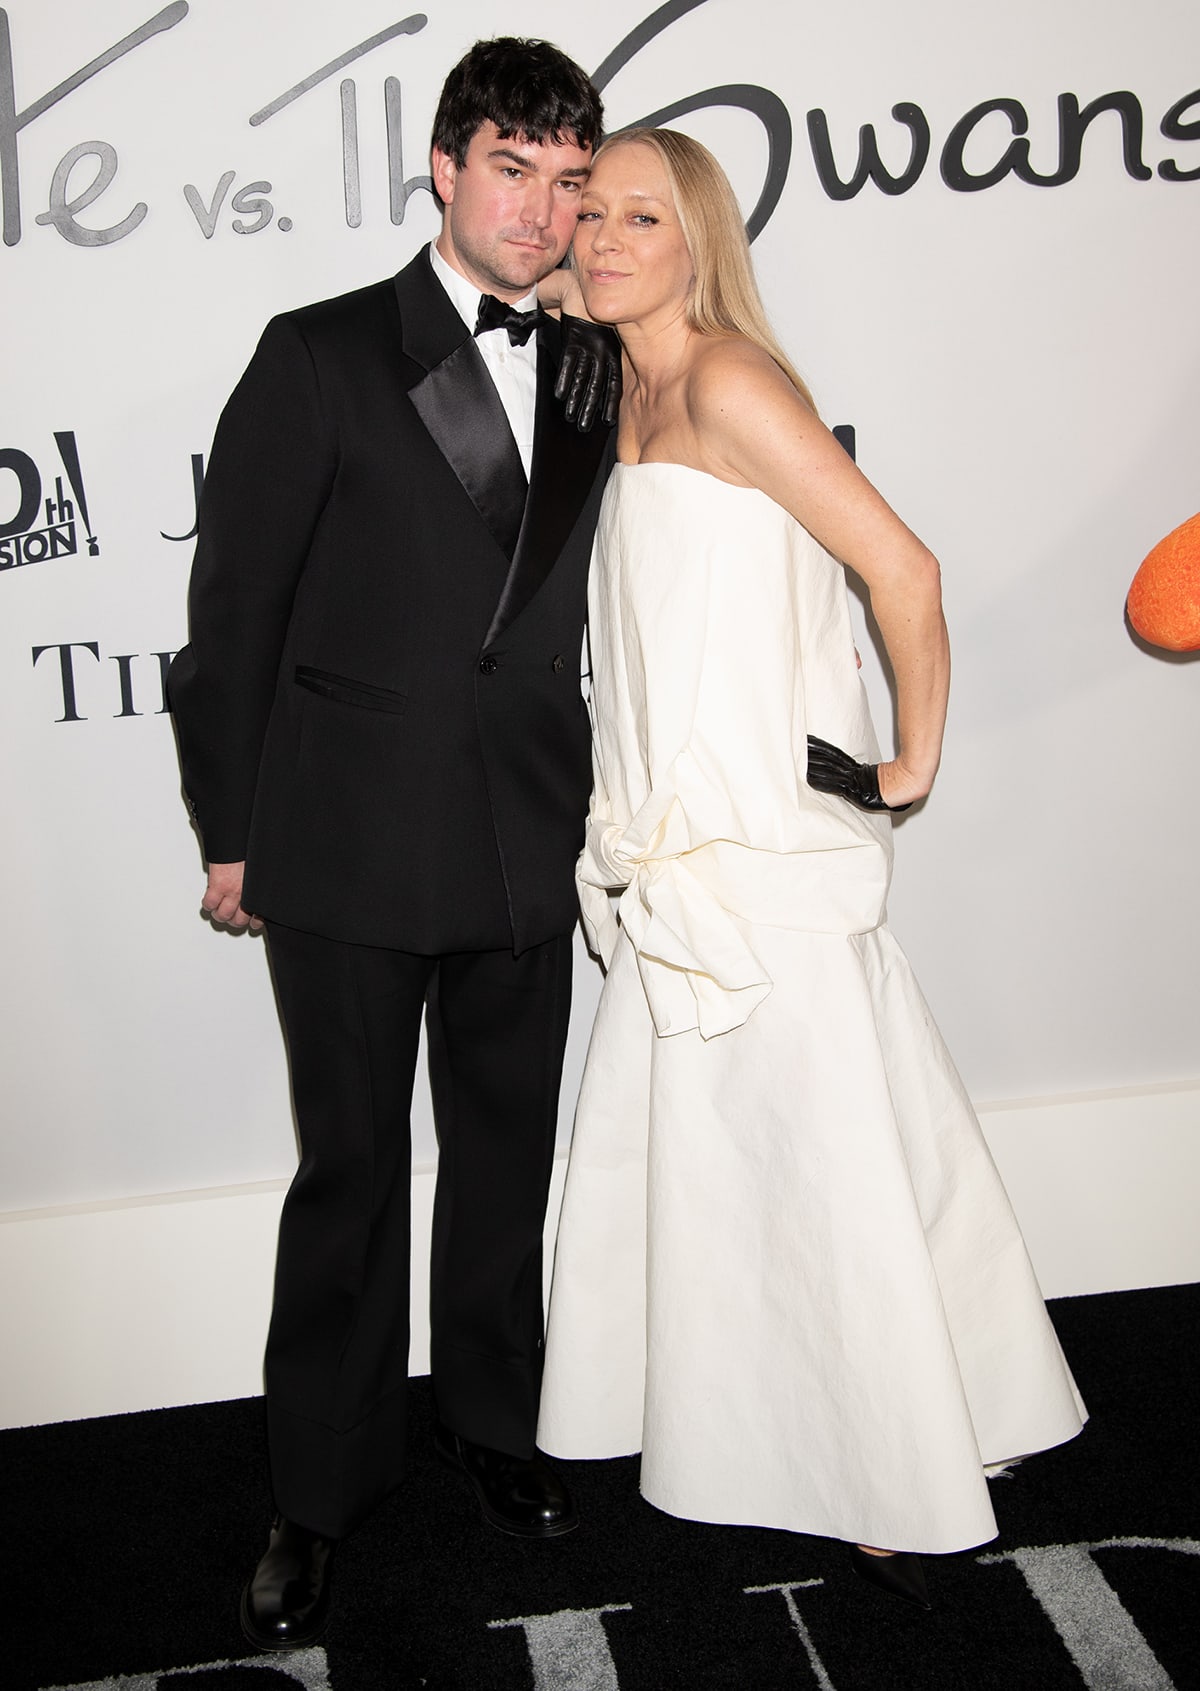 Chloe Sevigny poses with her Croatian art gallery director husband Siniša Mačković at the NYC premiere of Feud Season 2